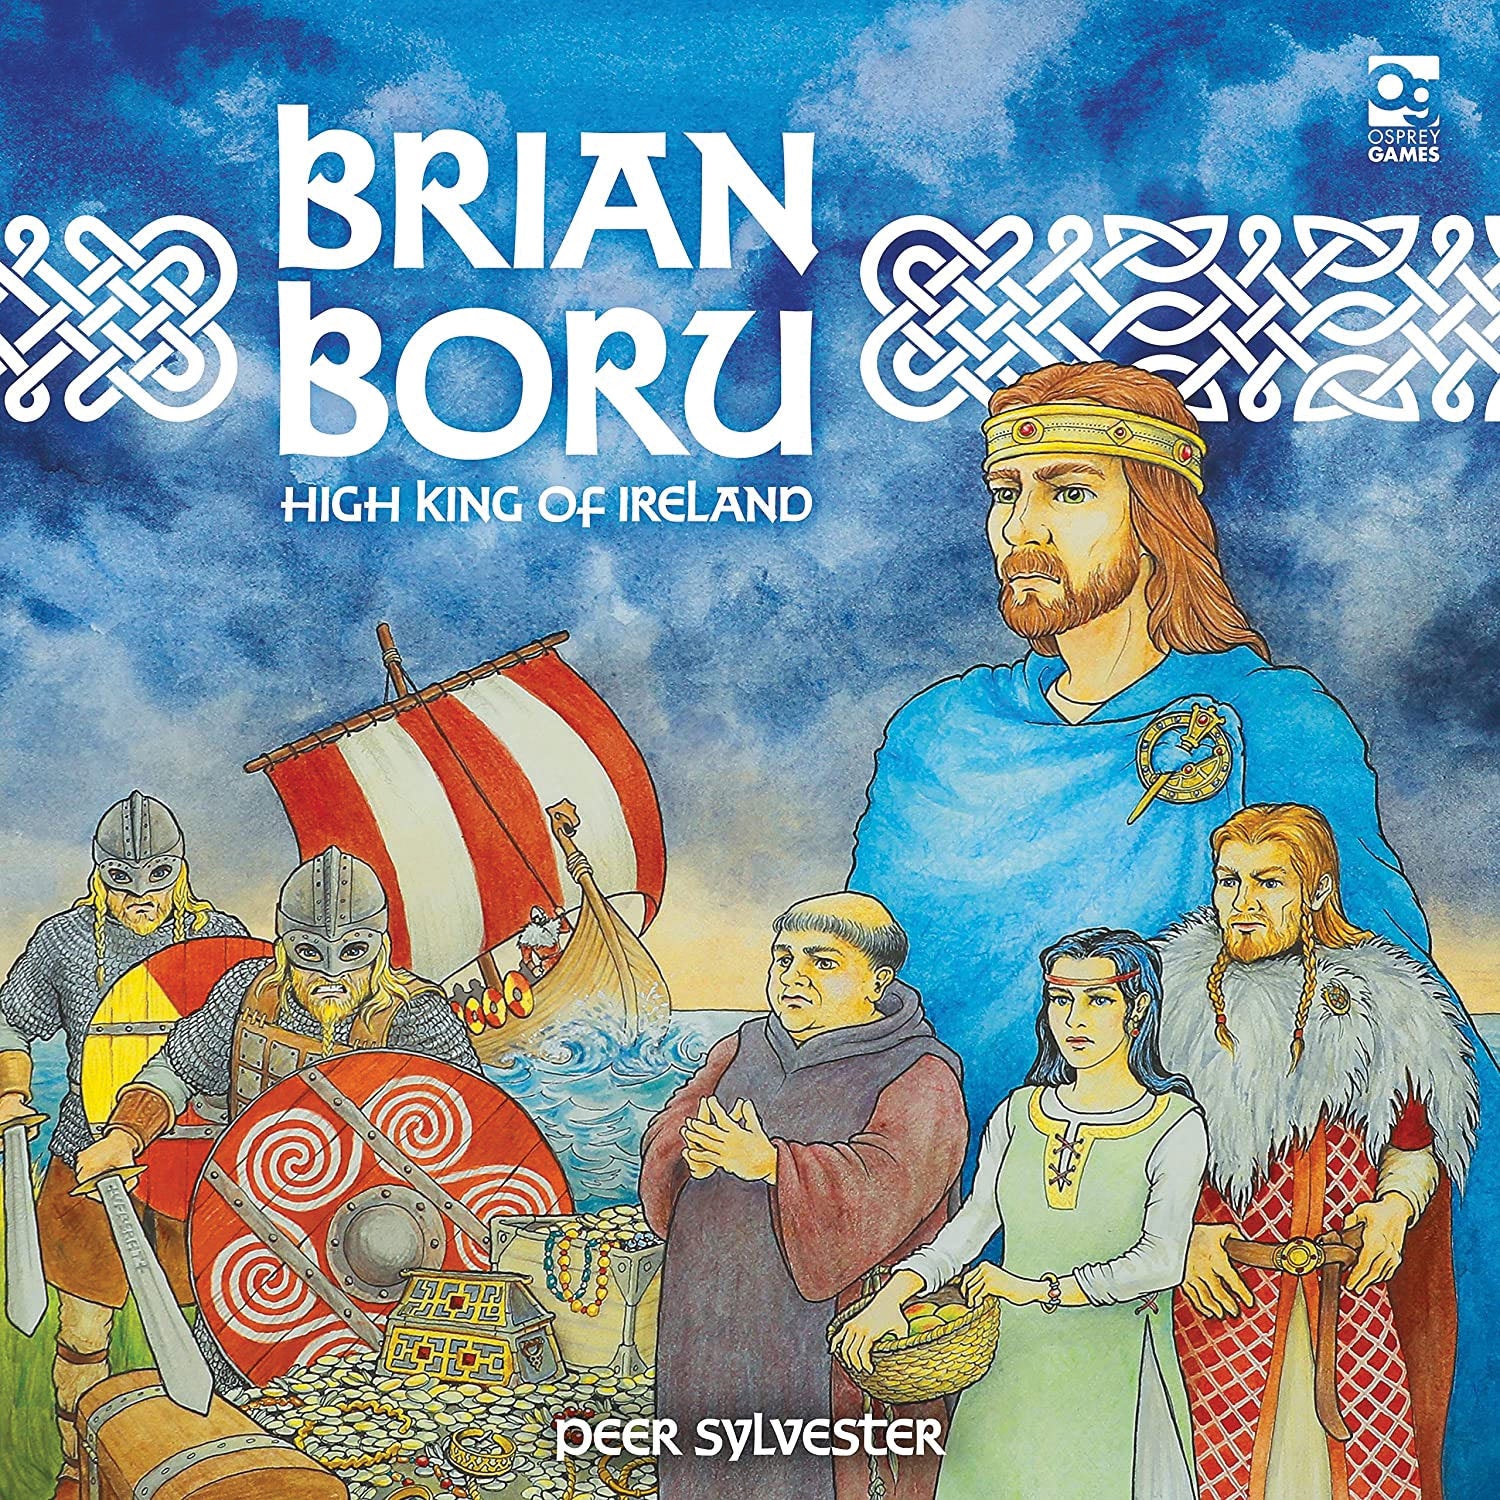 Brian Boru: High King of Ireland - Bards & Cards